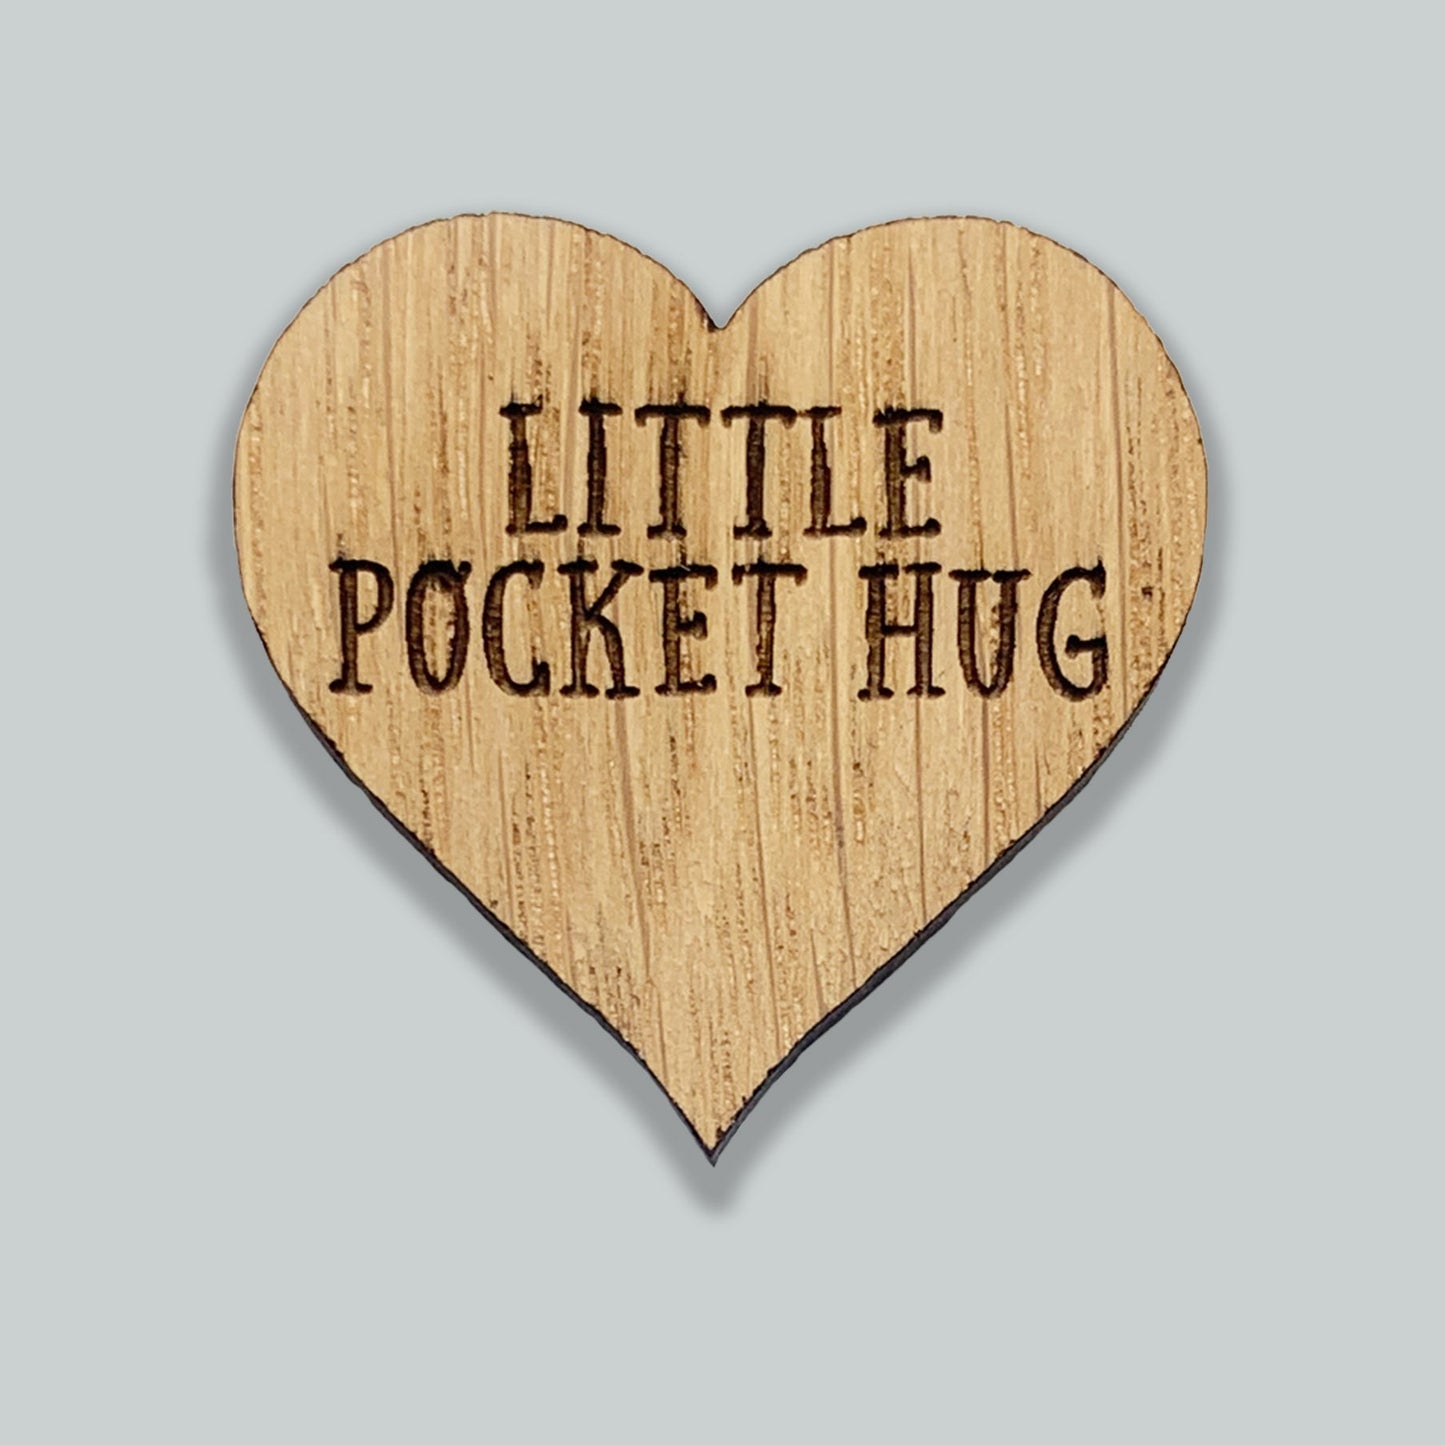 SAGGITARIUS, Star Sign - Oak Pocket Hug Token | J297